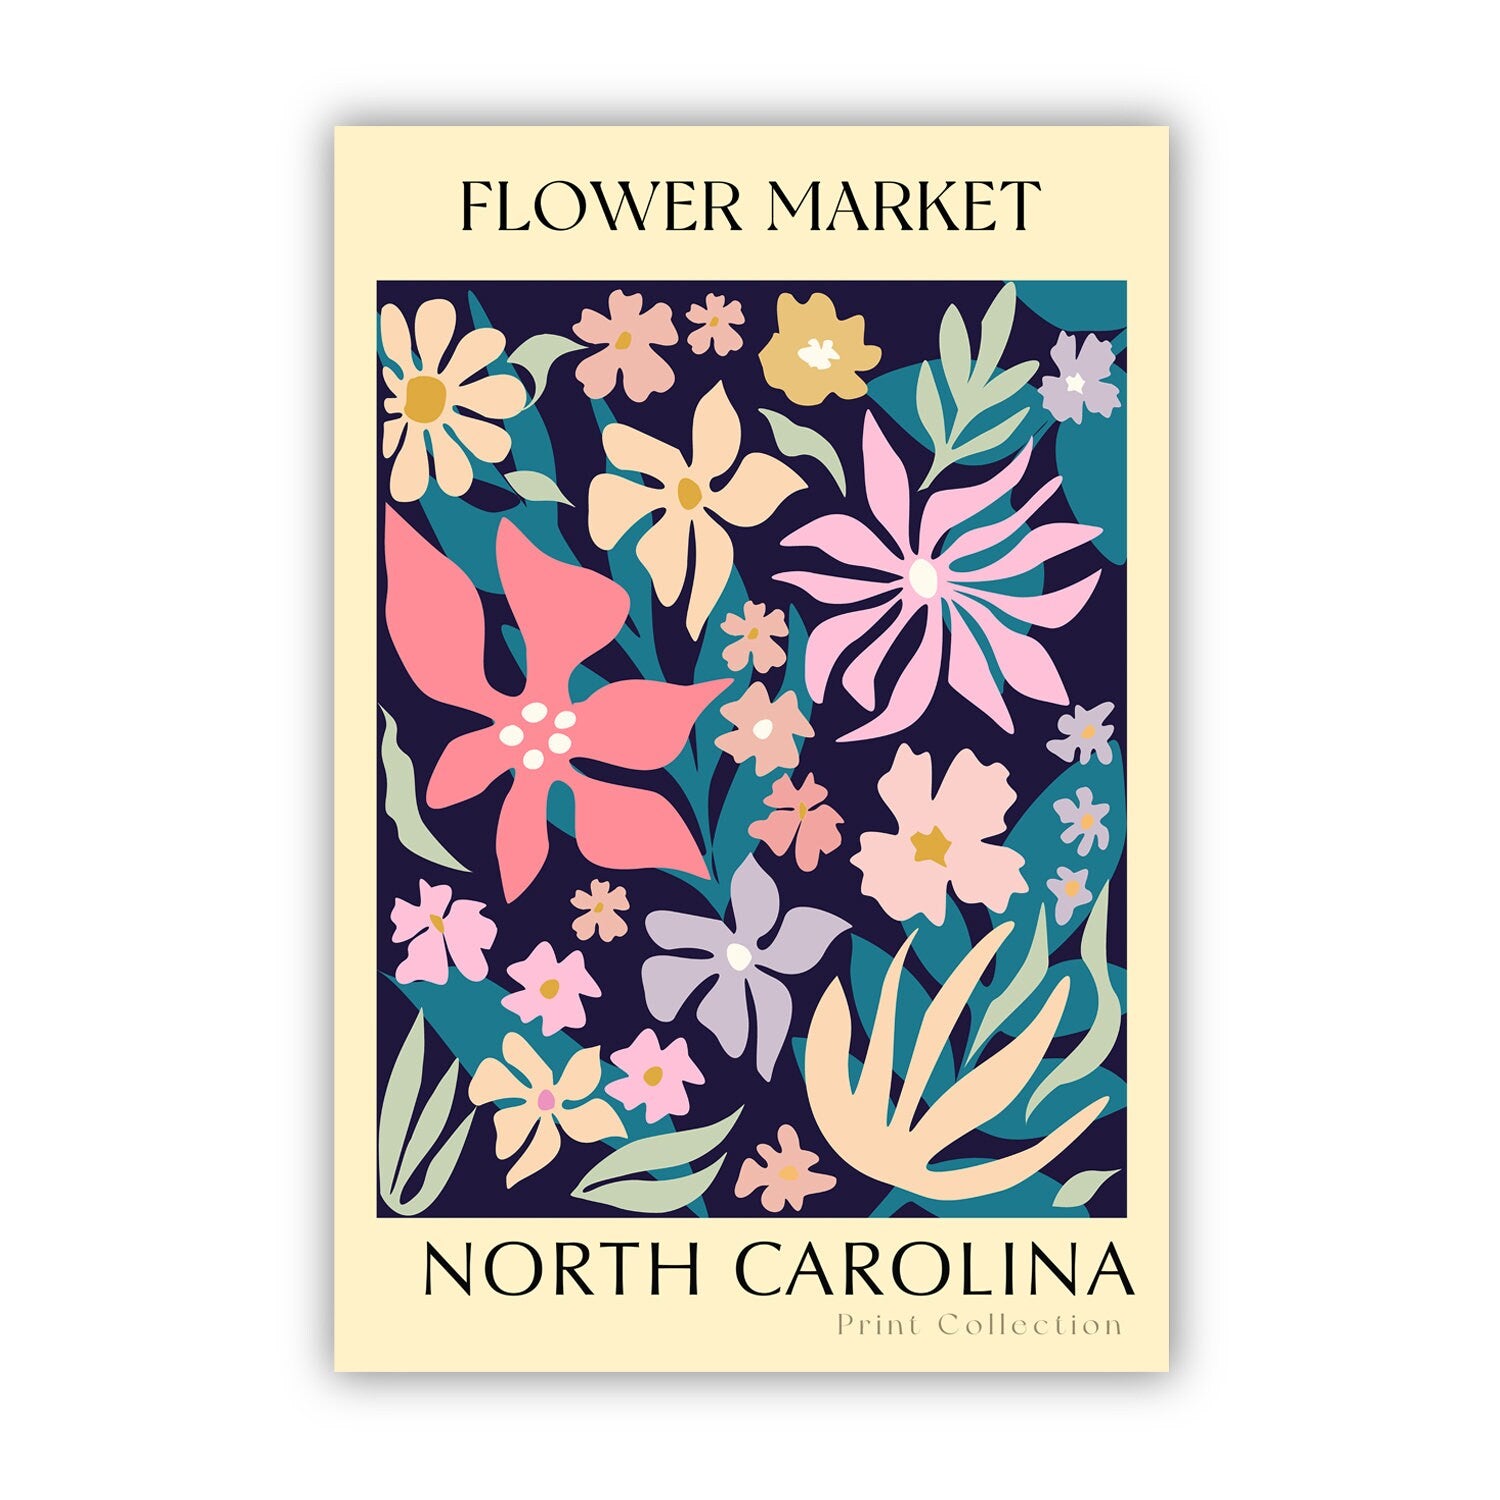 North Carolina State flower print, States poster, North Carolina flower market poster, Botanical posters, Nature floral poster artwork